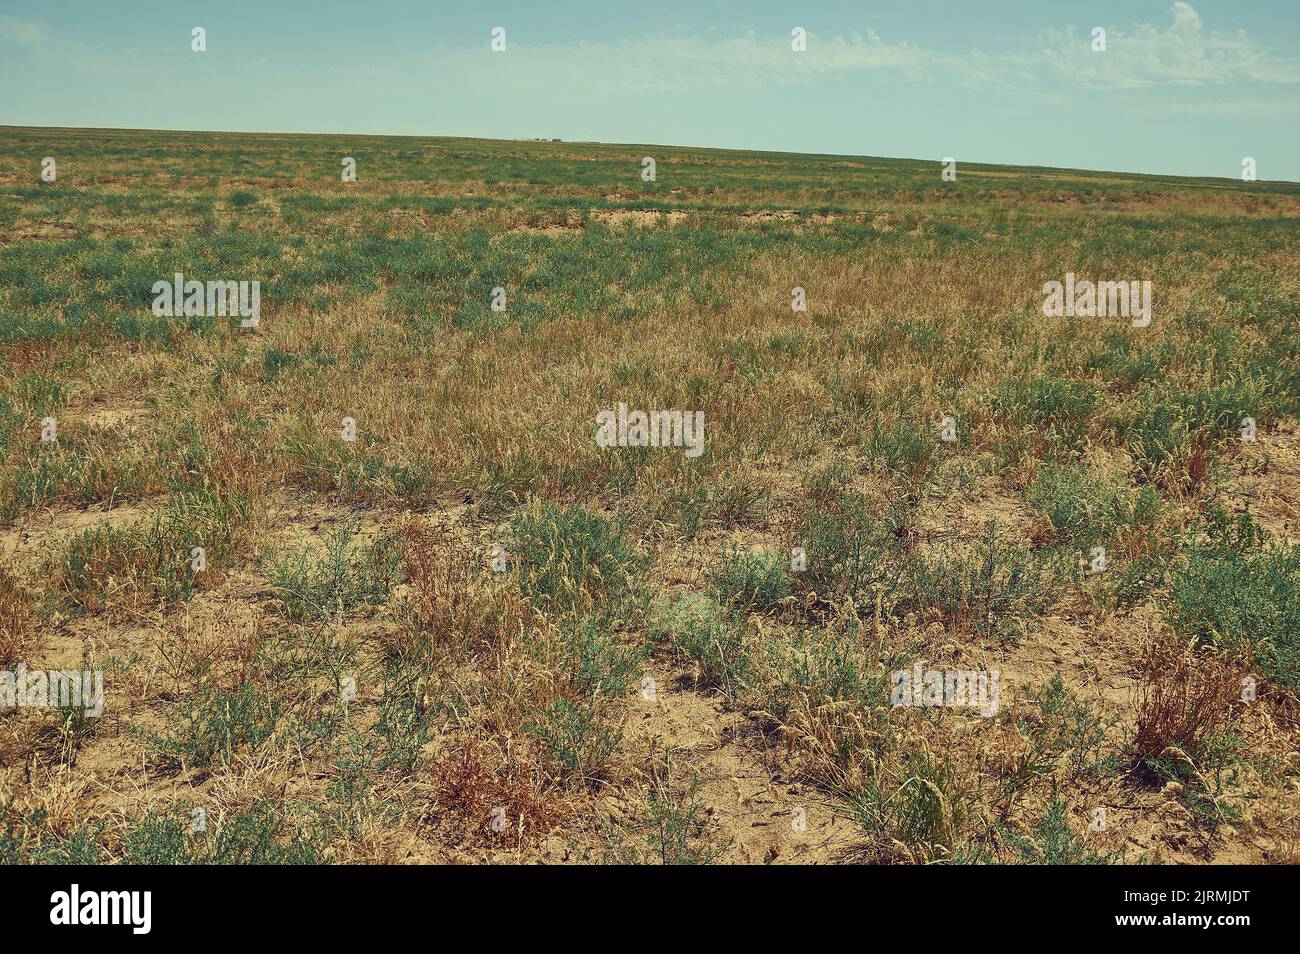 Deserted area of the steppe. Republic of Kalmykia, Russia Stock Photo